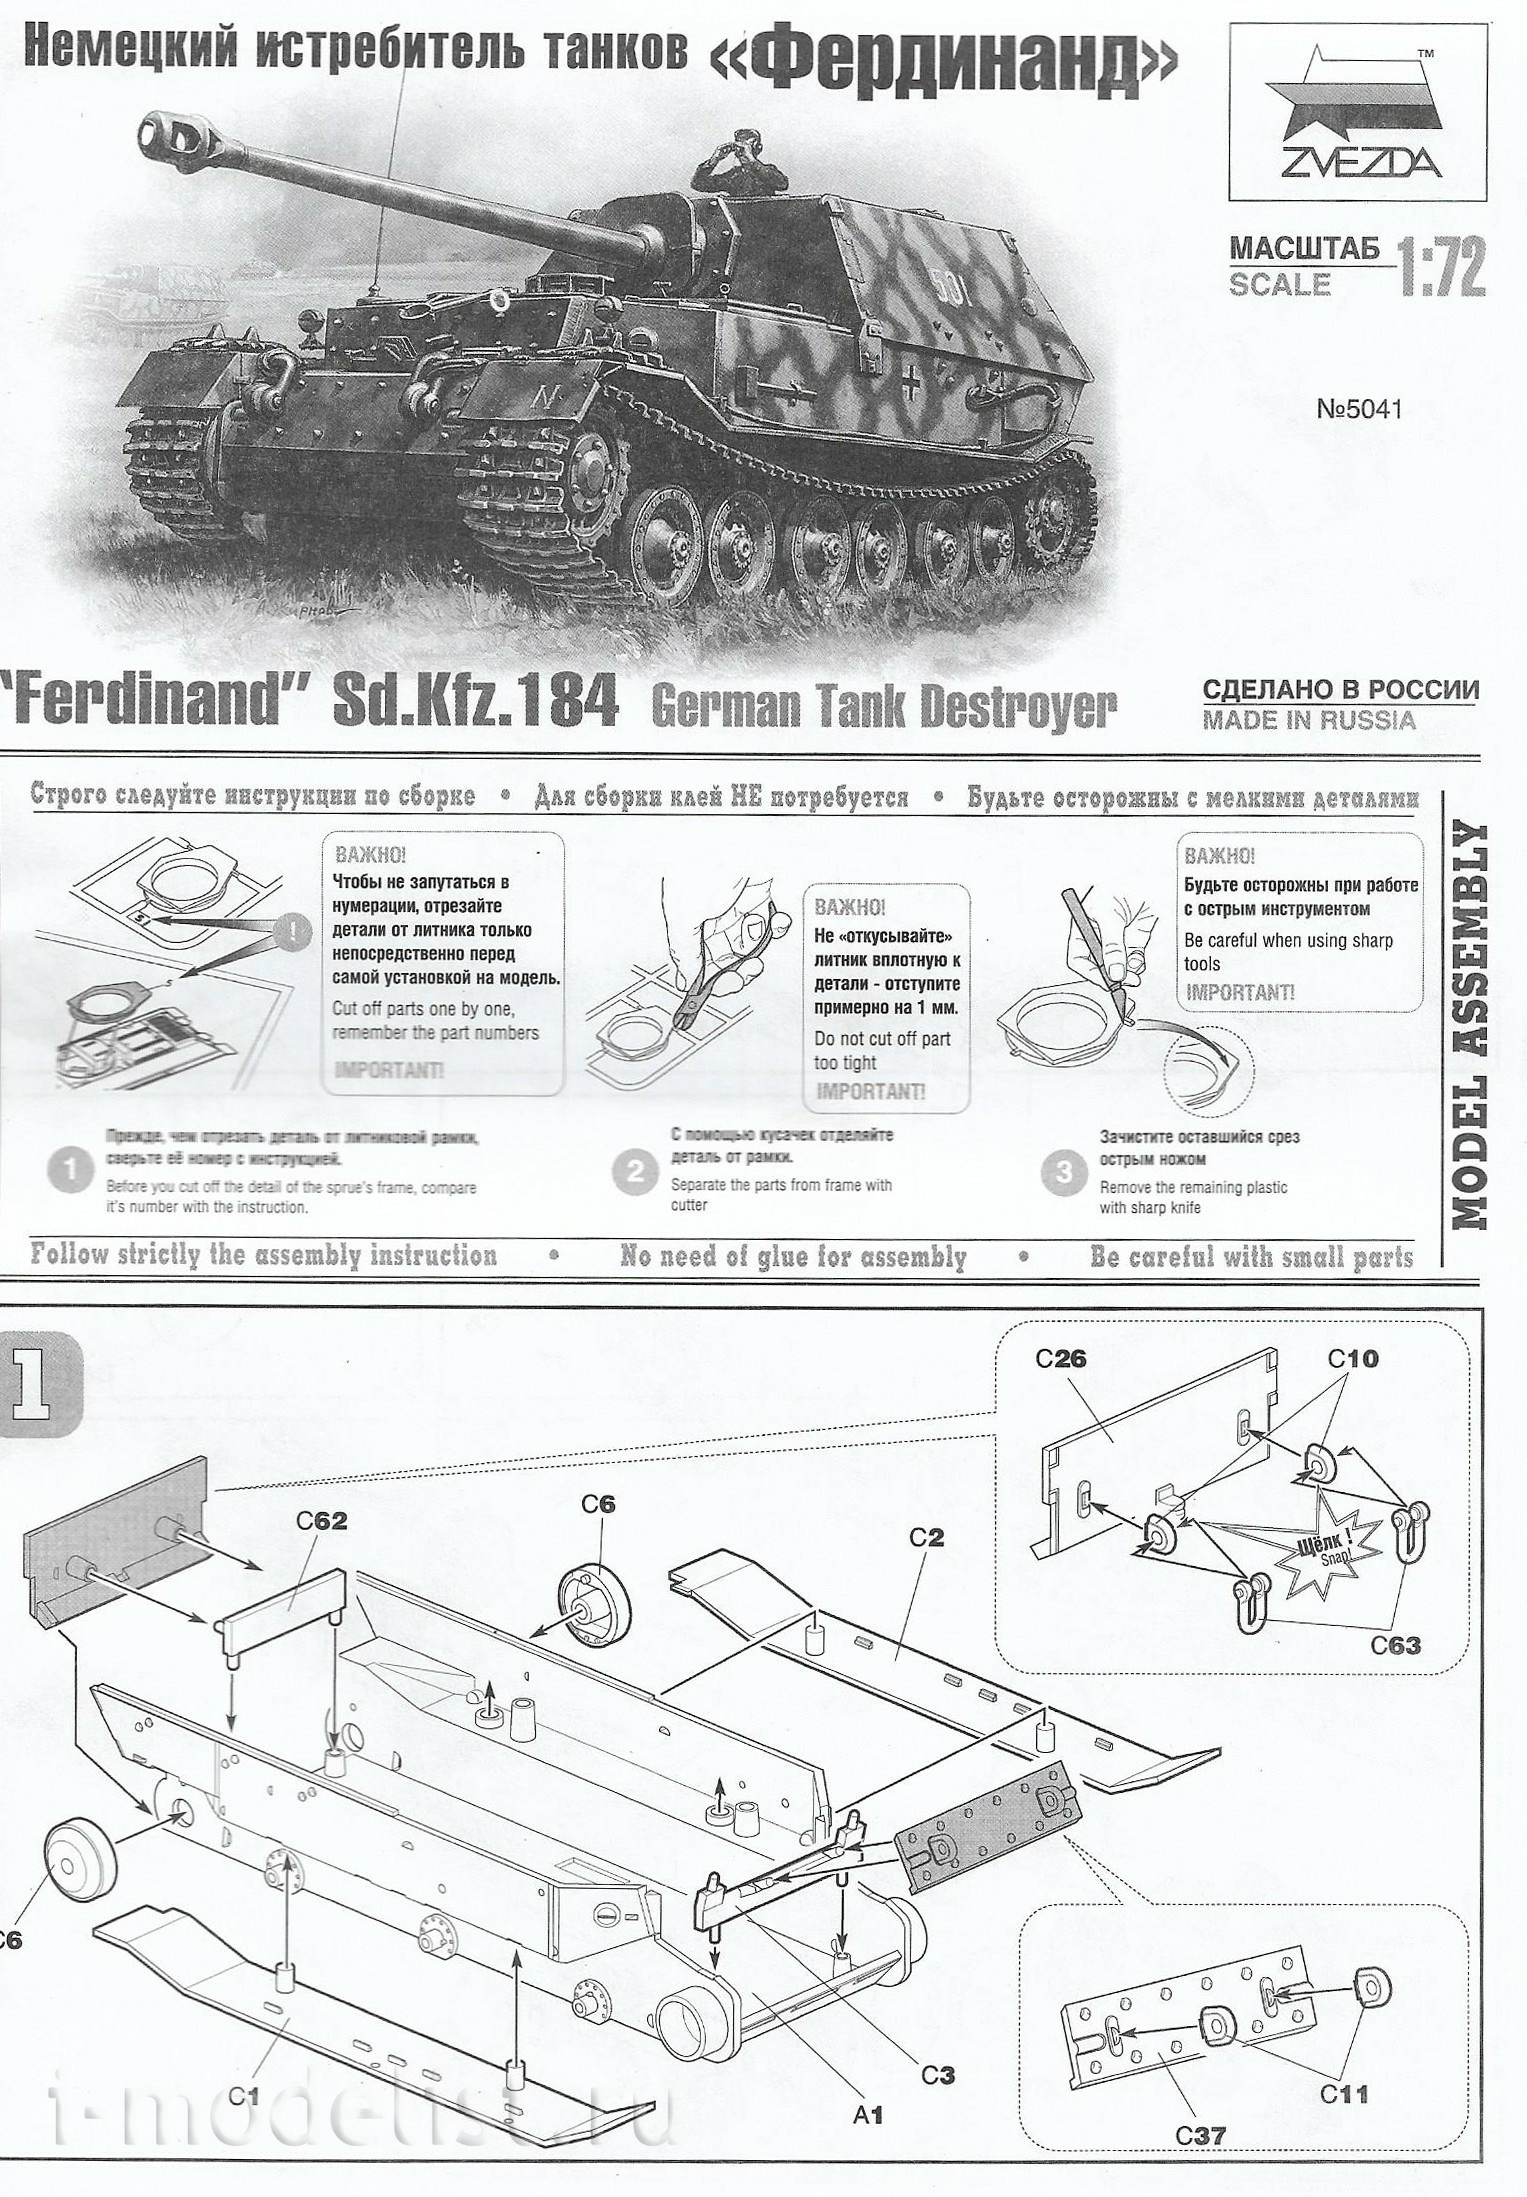 5041 Zvezda 1/72 German tank destroyer 